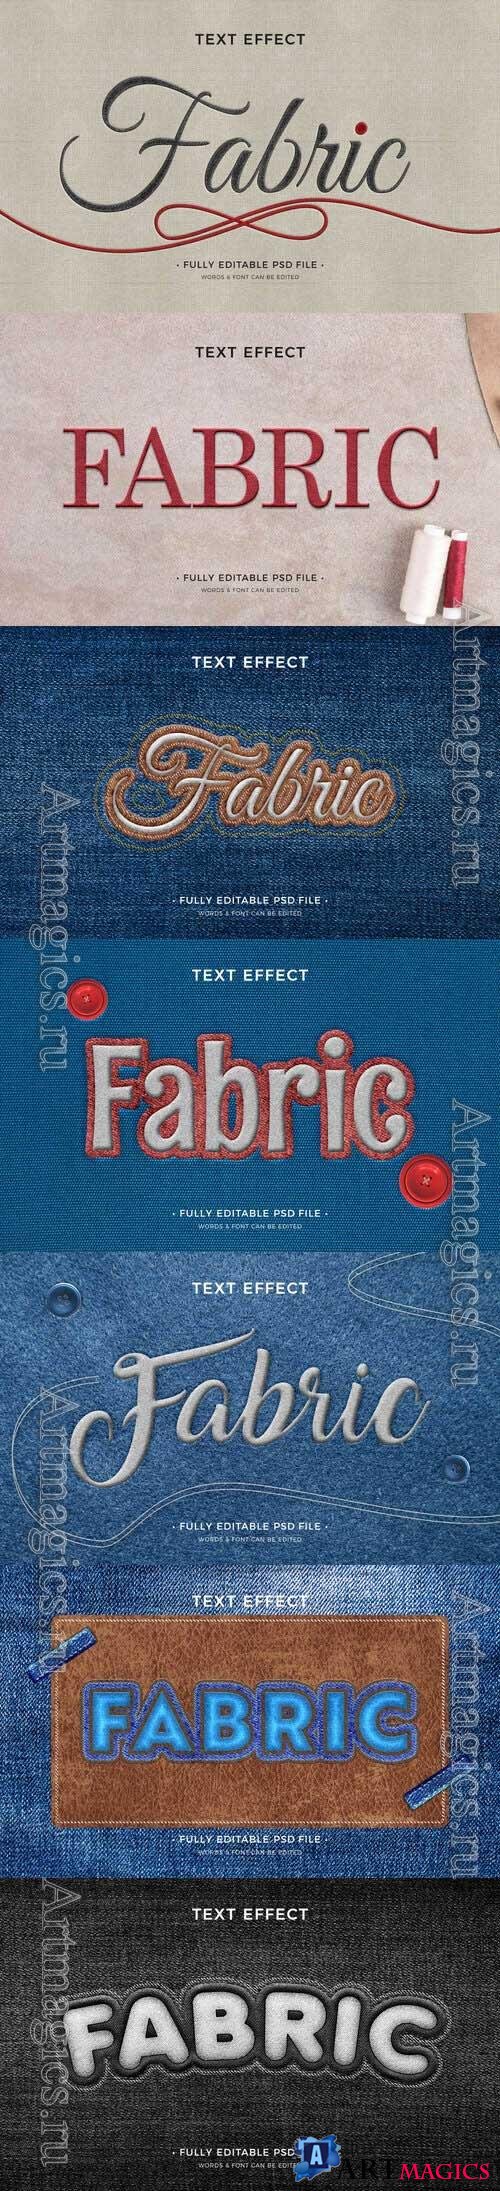 PSD fabric text effect